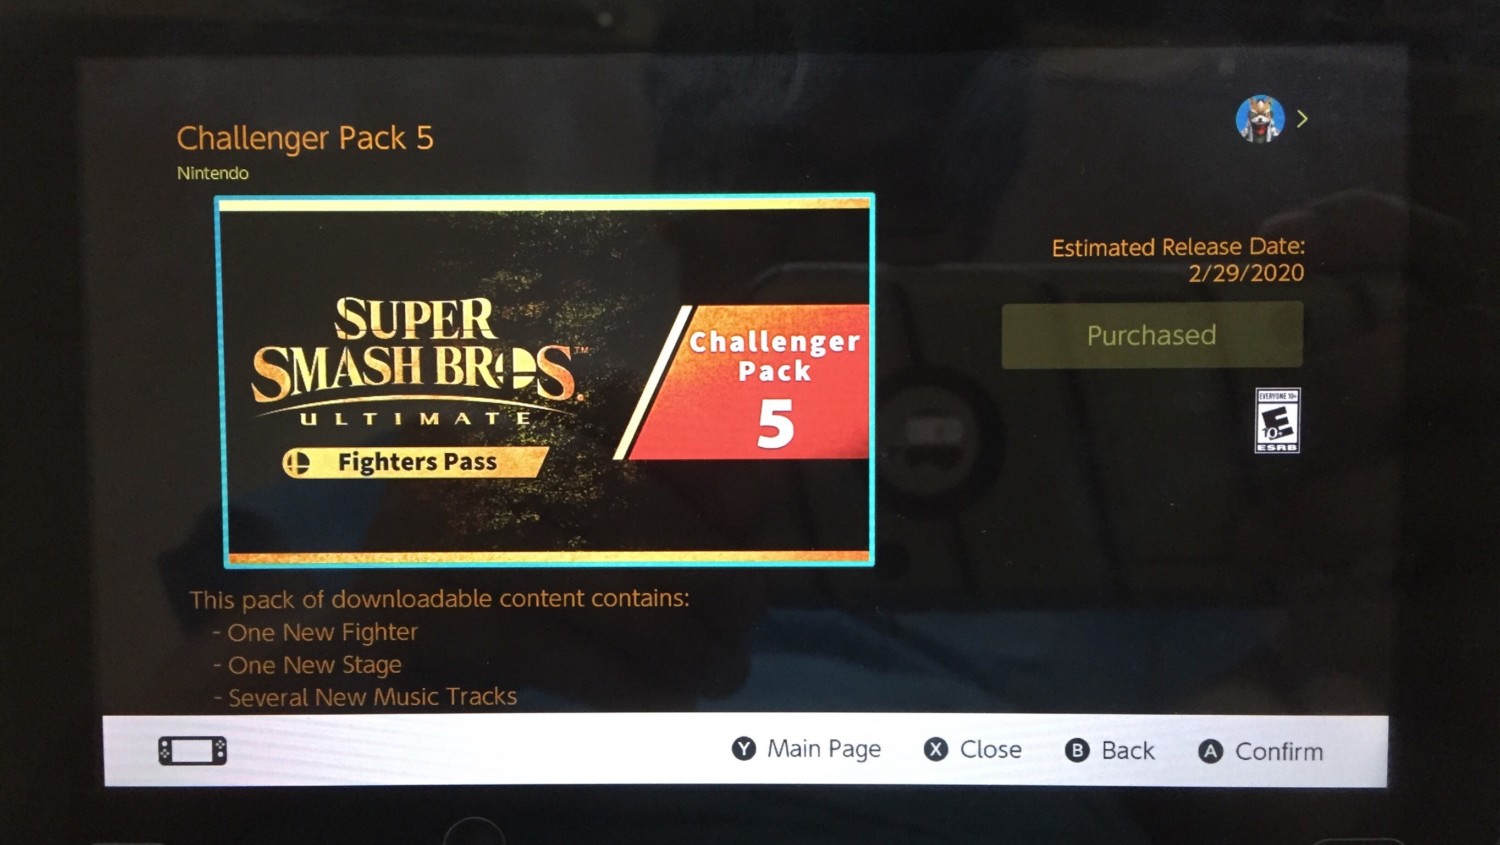 Super Smash Bros. Ultimate Fighters Pass DLC - Nintendo Switch, Nintendo  Switch